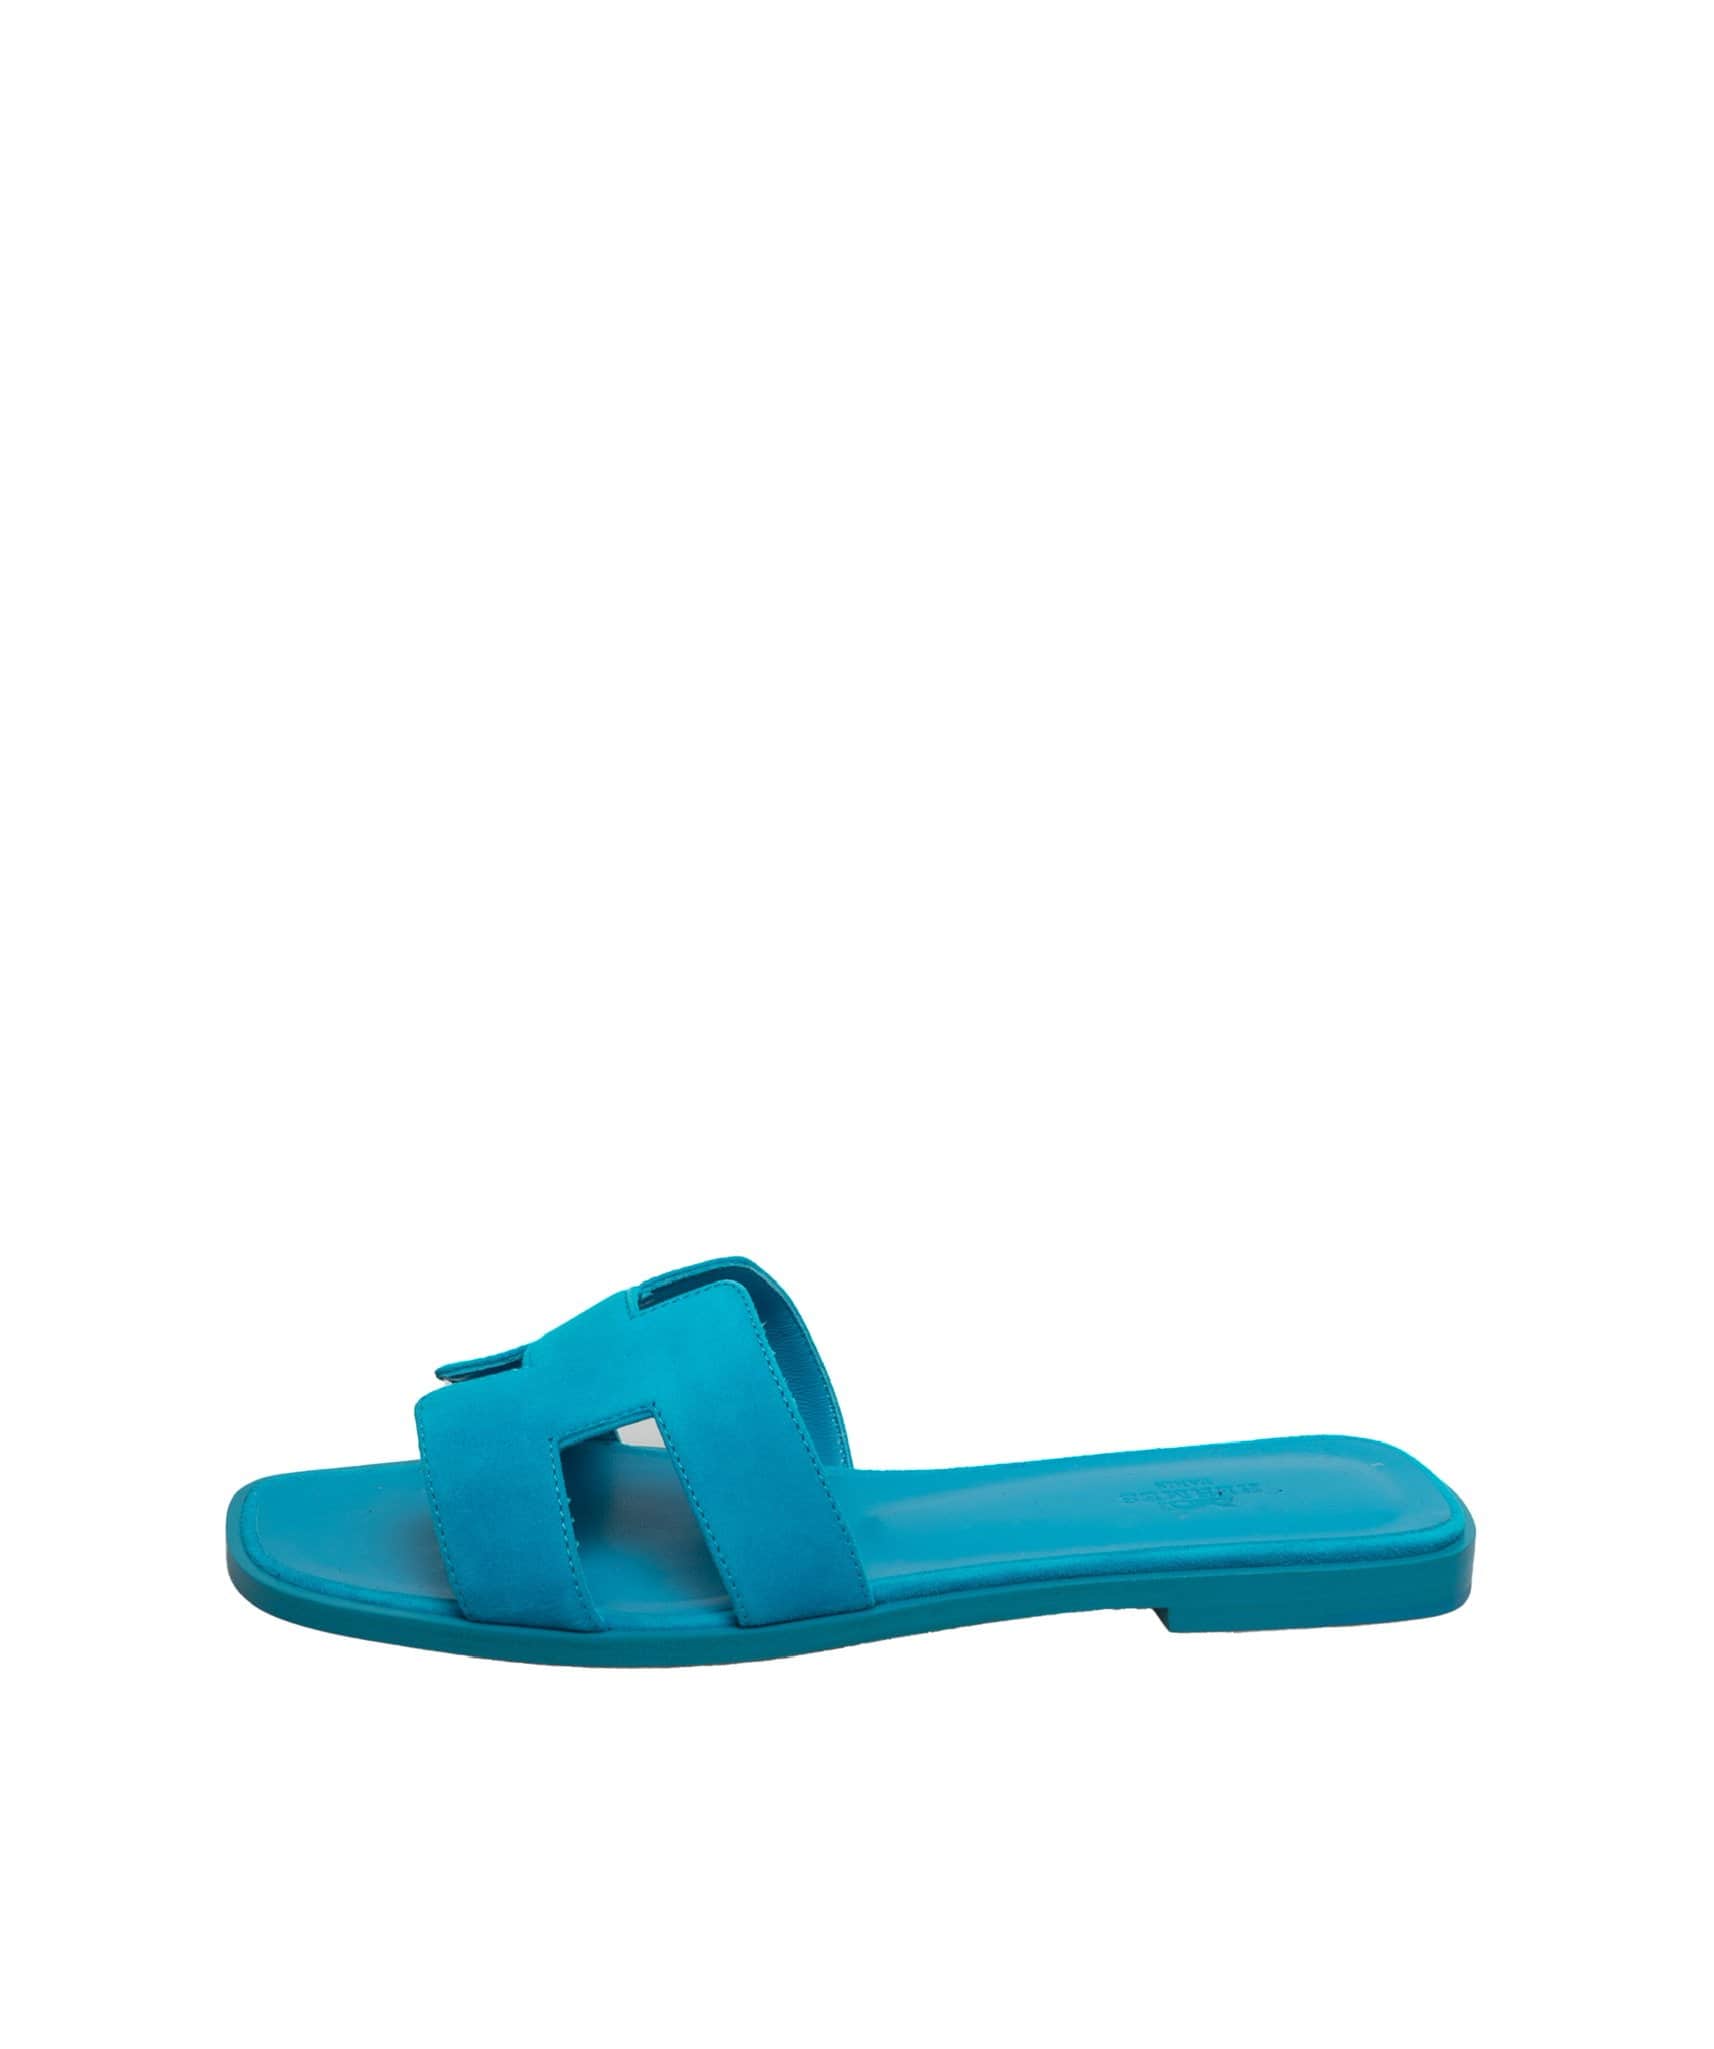 LuxuryPromise Hermes oran sandals blue 39